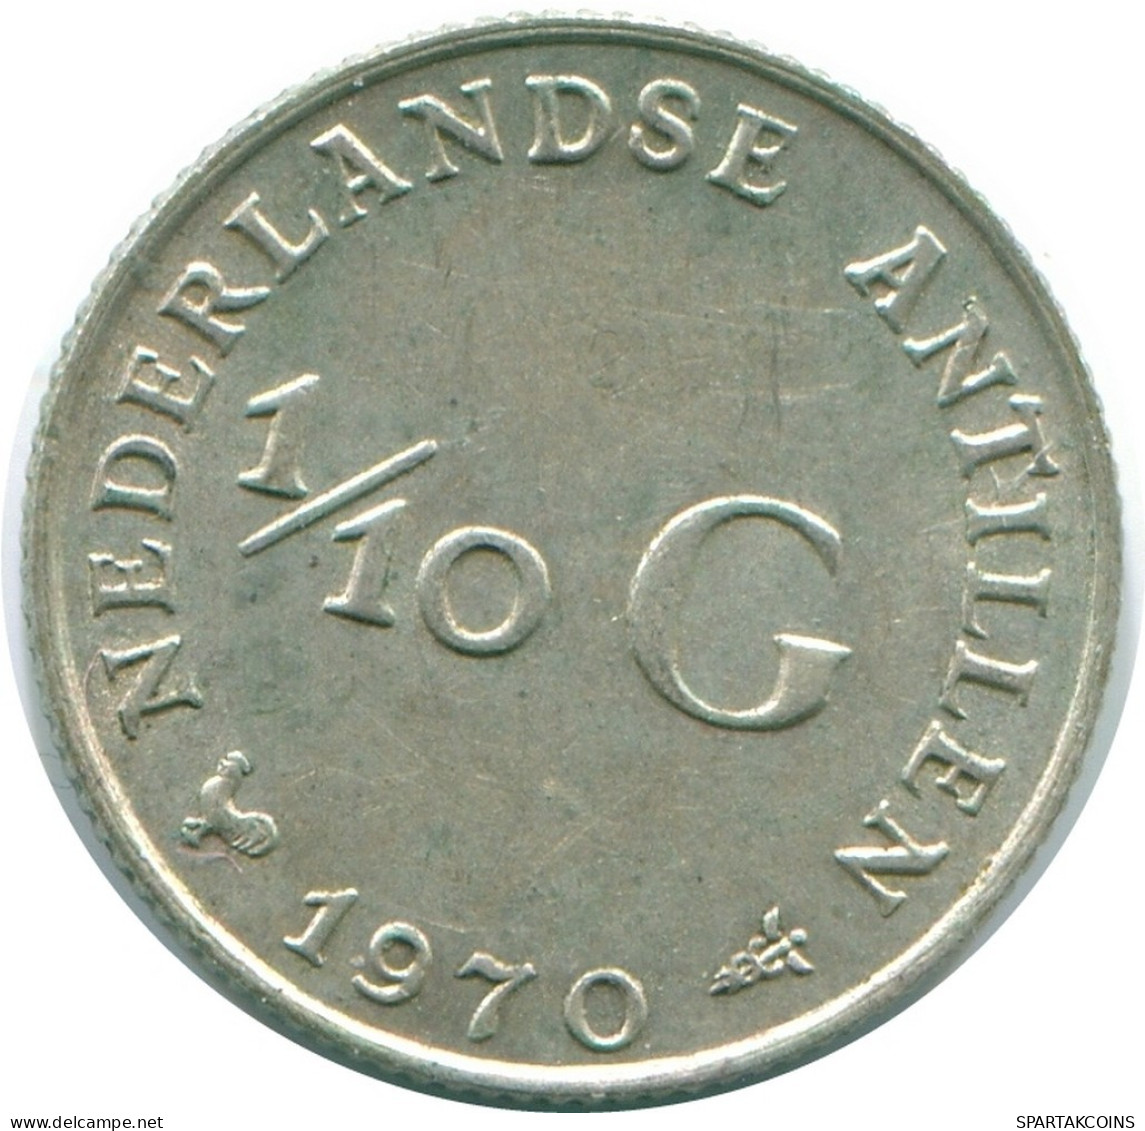 1/10 GULDEN 1970 NIEDERLÄNDISCHE ANTILLEN SILBER Koloniale Münze #NL13073.3.D.A - Netherlands Antilles